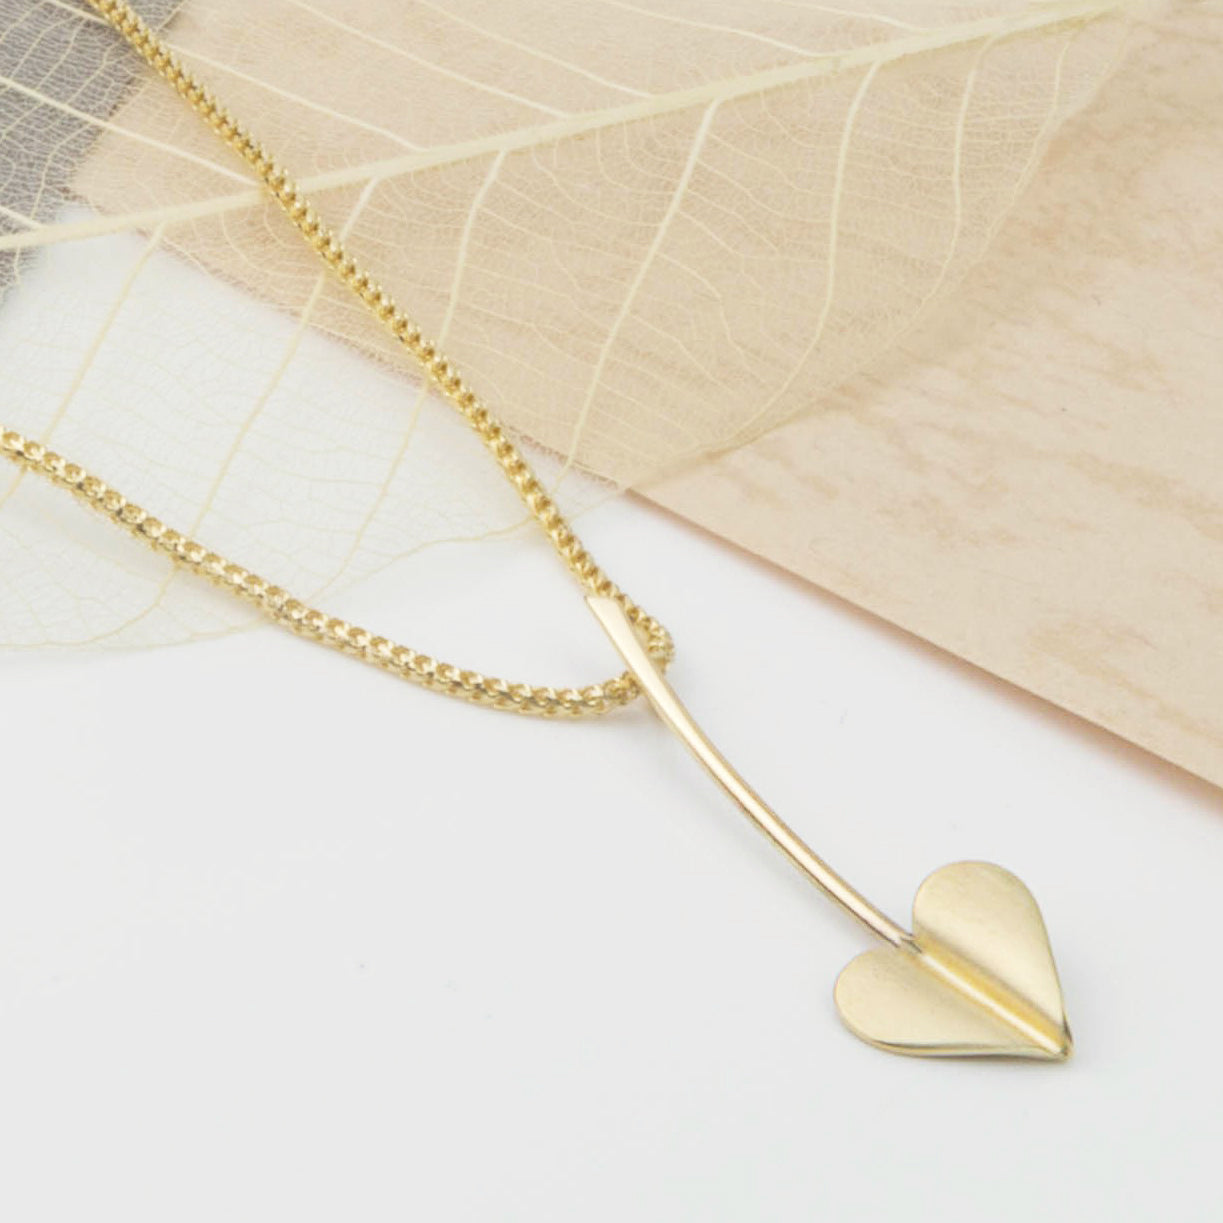 Vintage 9ct Gold Heart Pendant Necklace - Etsy